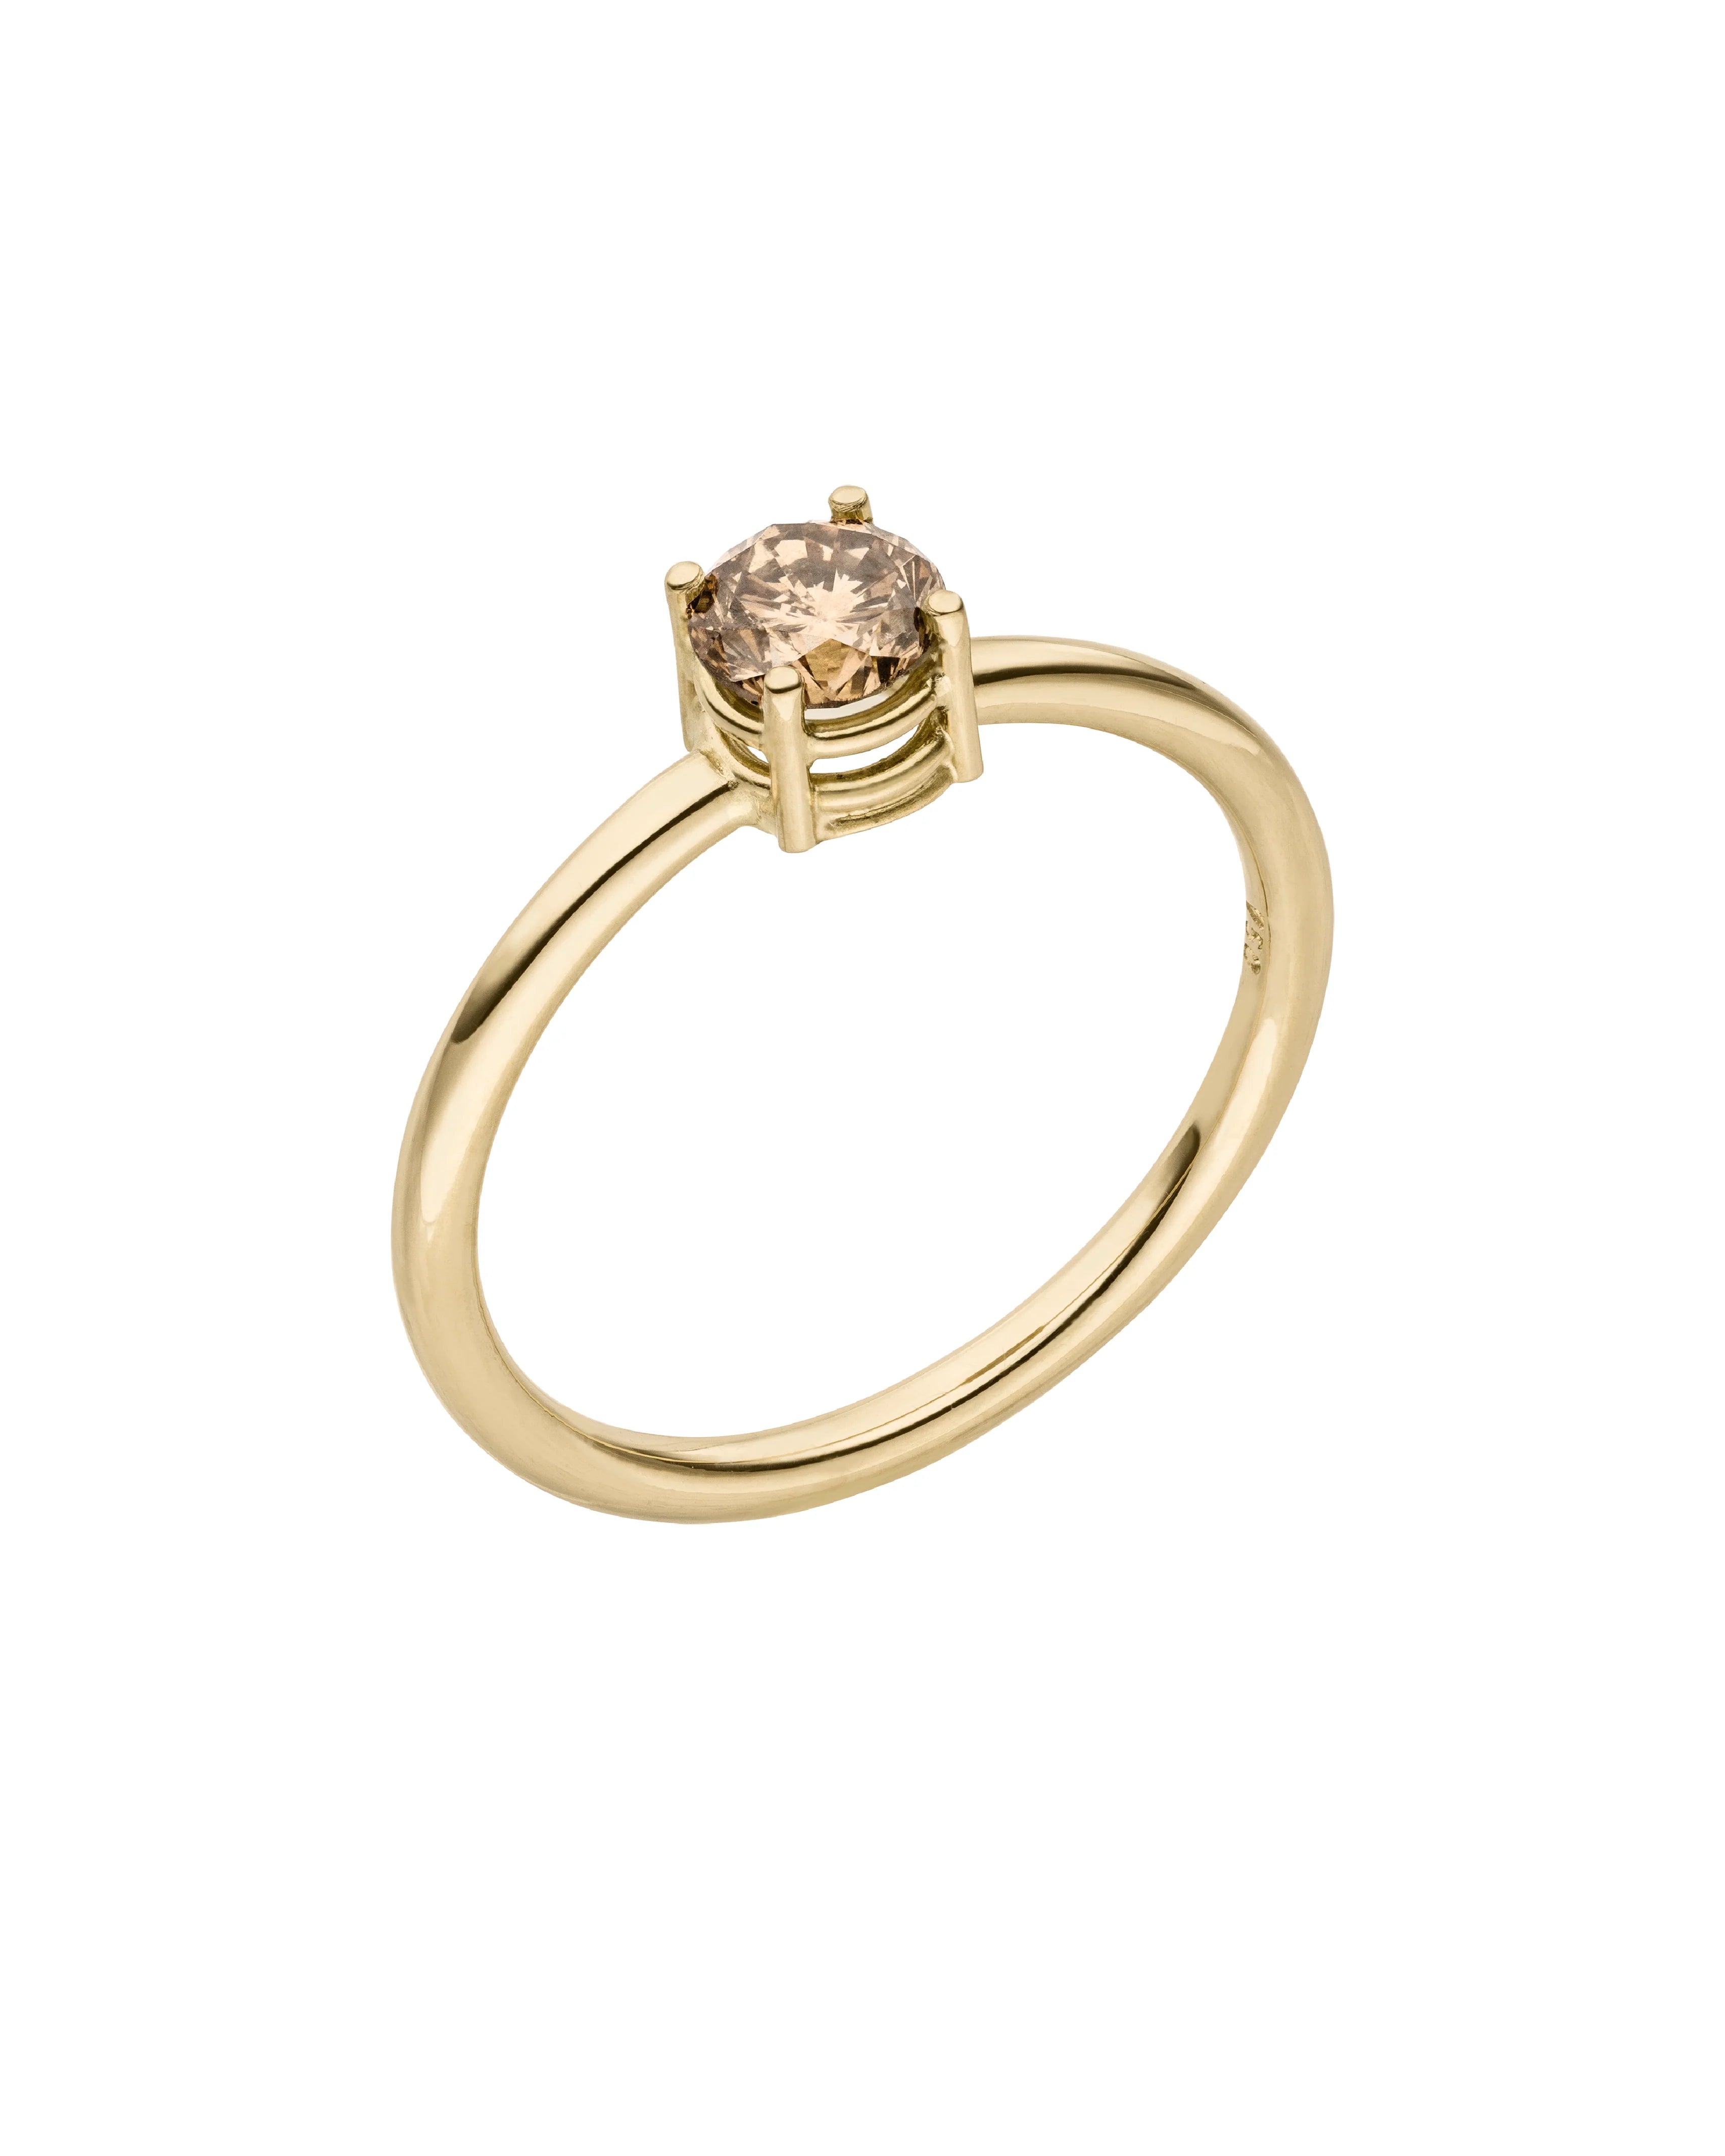 LIANA - Verlobungsring Gold - Gelbgold 585